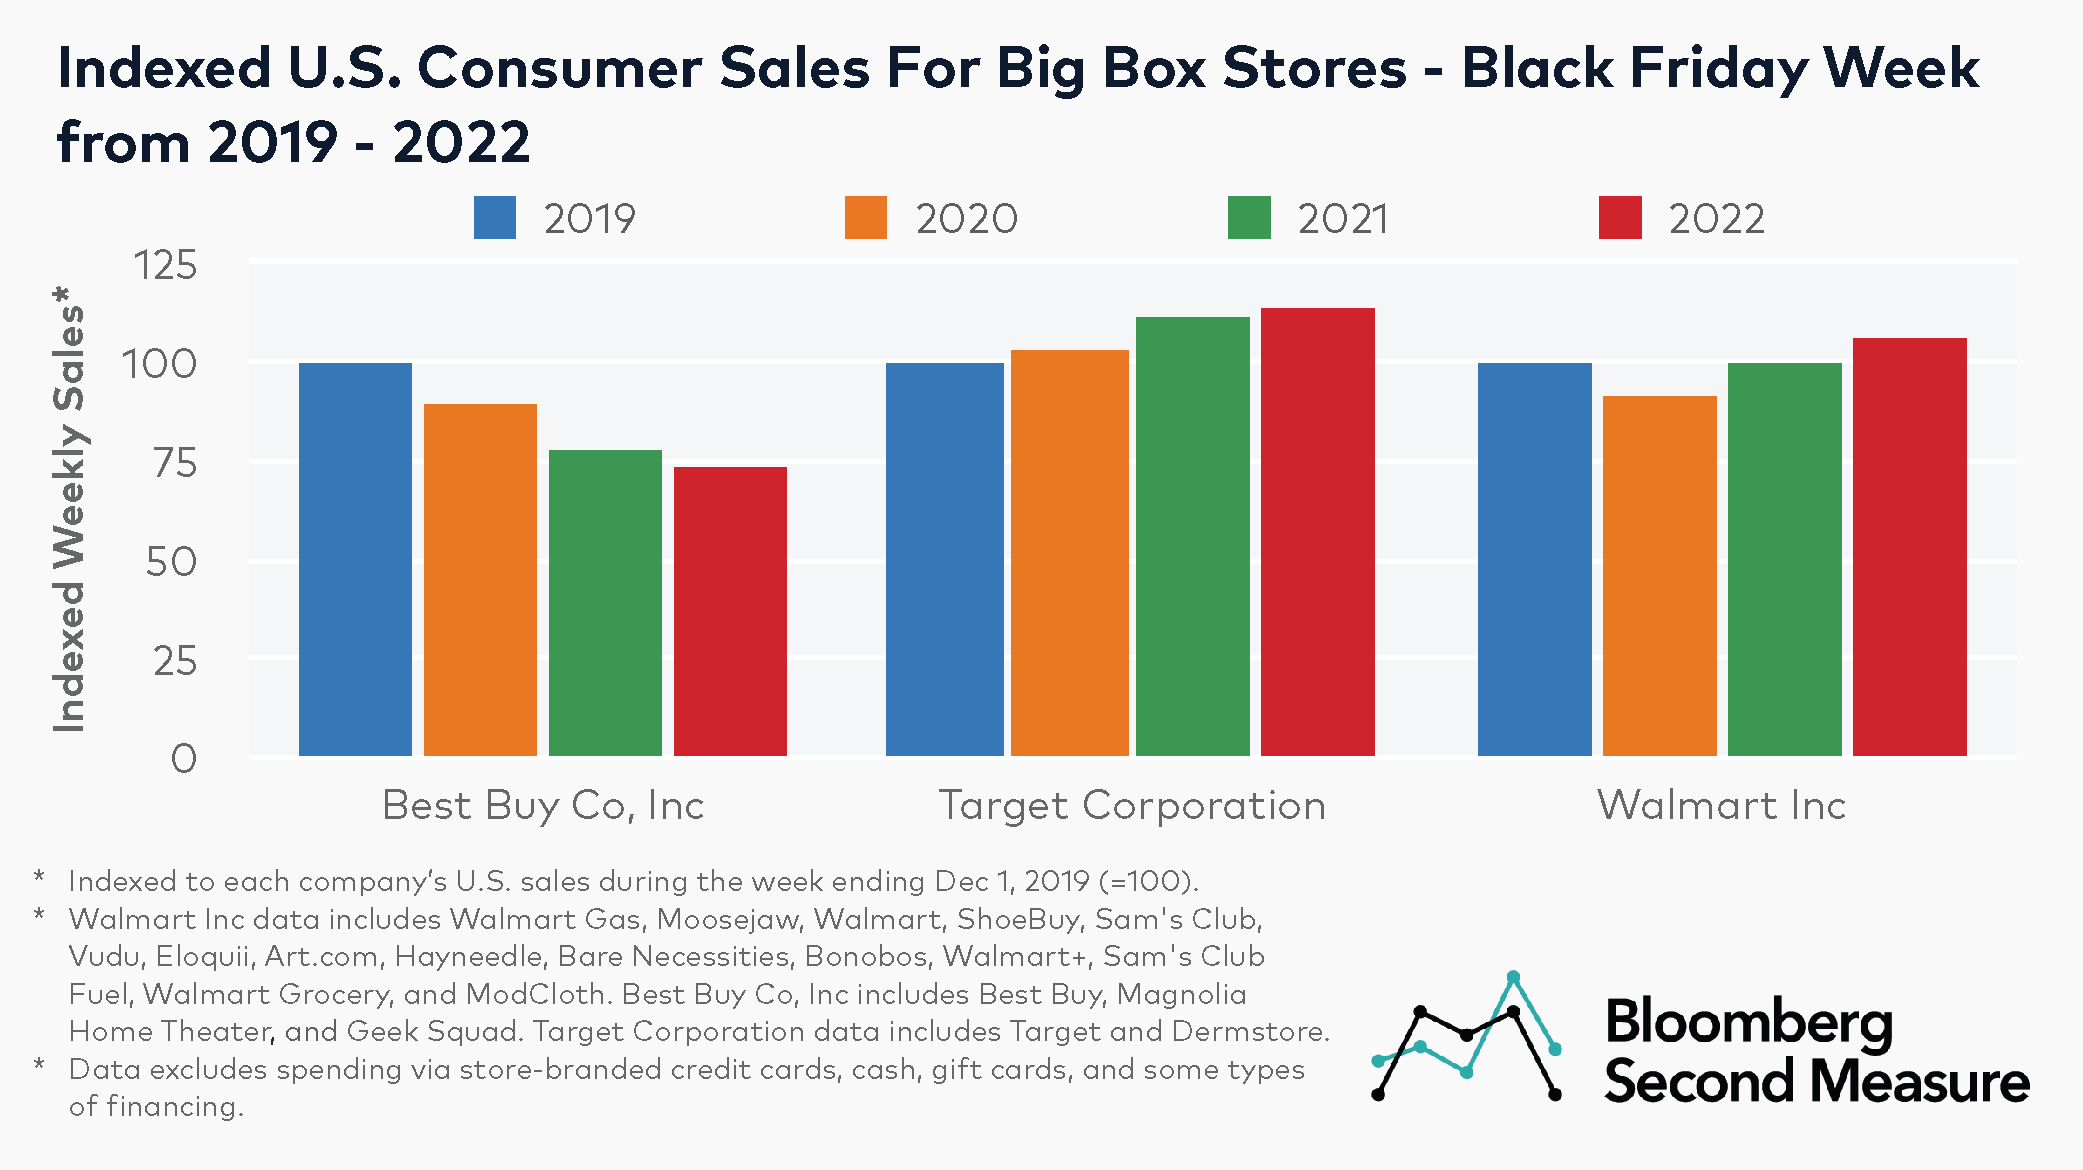 https://secondmeasure.com/wp-content/uploads/2022/12/1-Black-Friday-2022-Big-Box-Retailers-Sales-Growth-Walmart-vs-Target-vs-Best-Buy-.png